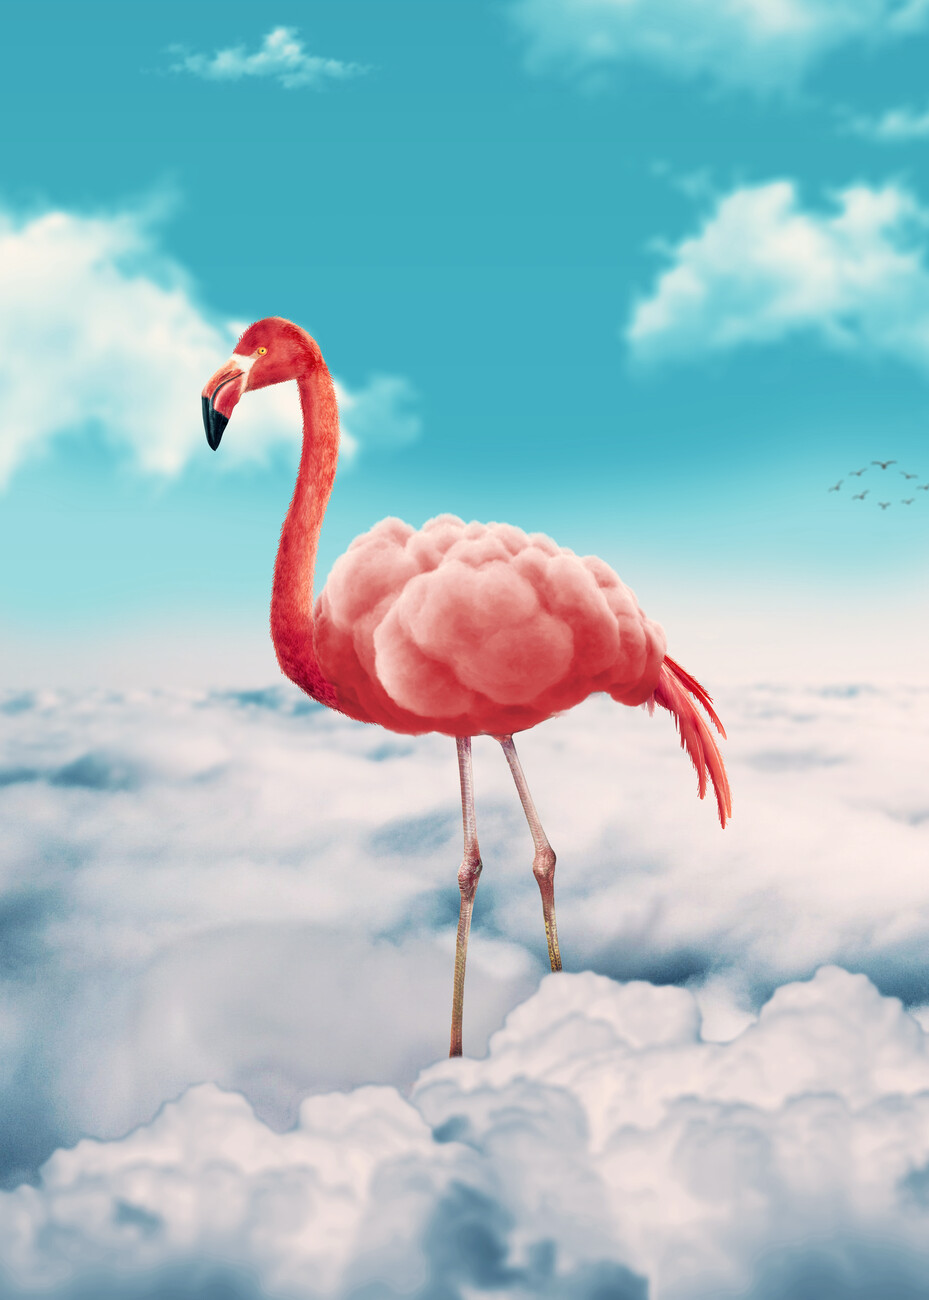 Colourful Flamingo Print - Print Room Ltd